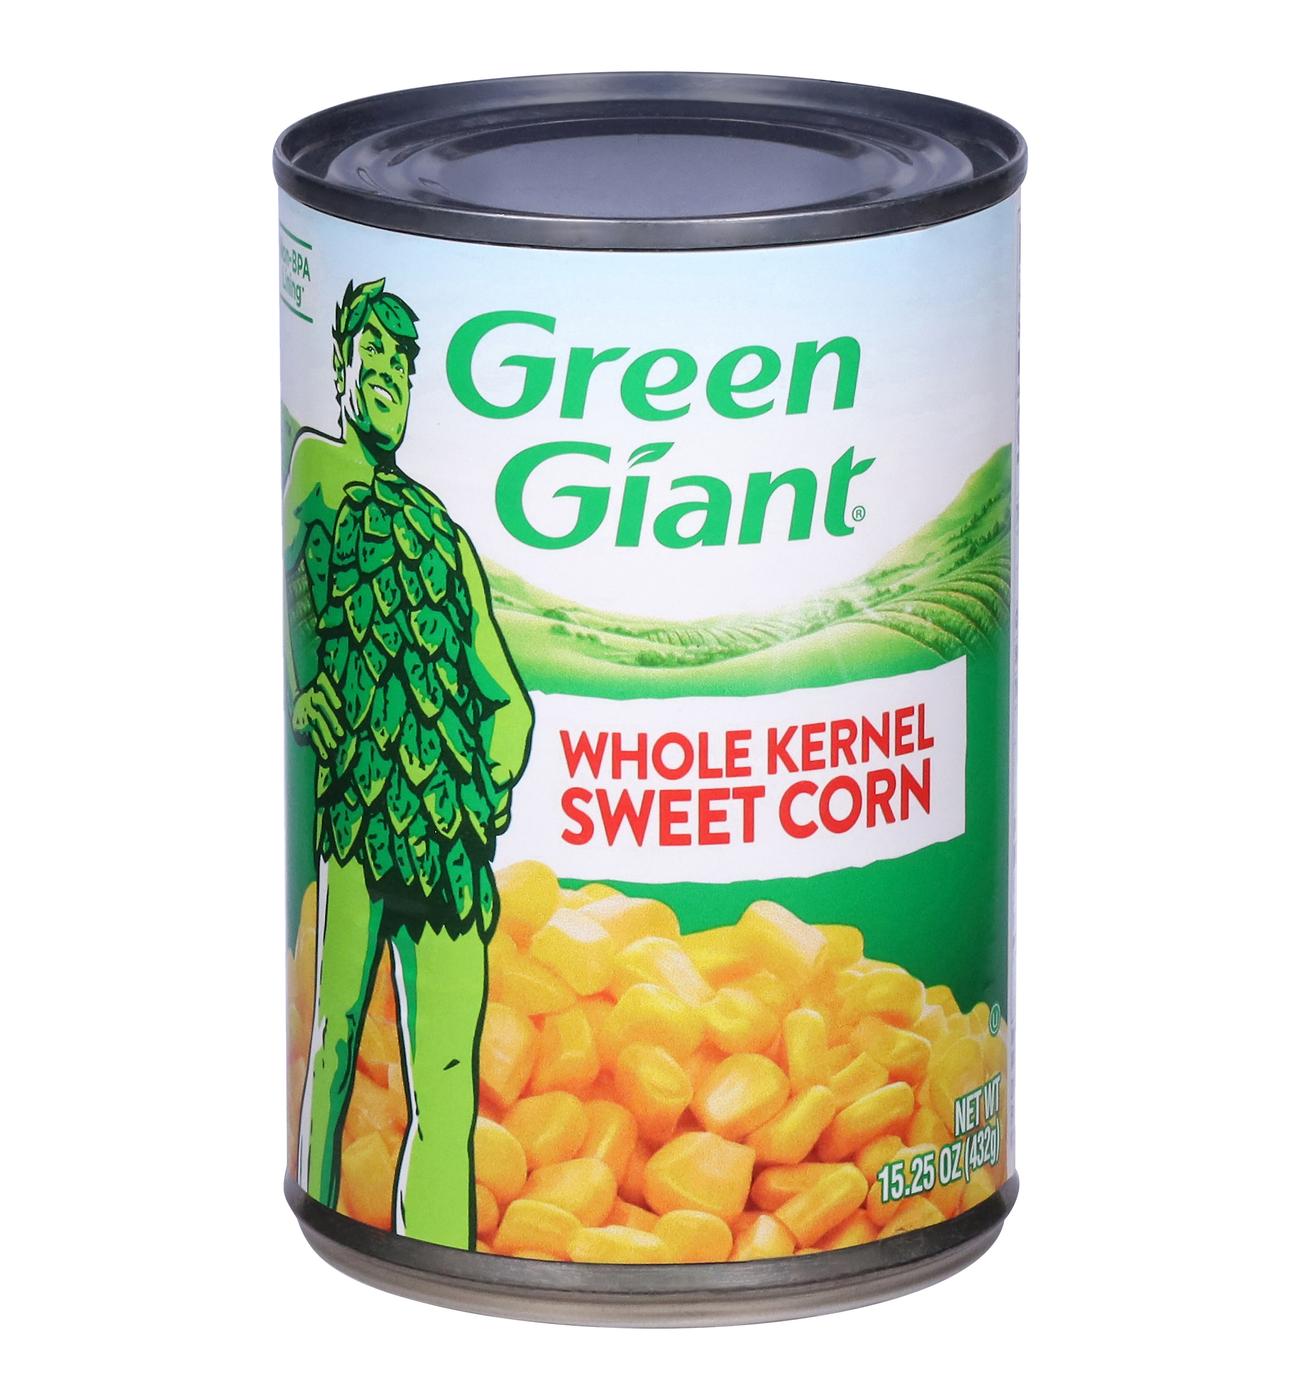 Green Giant Whole Kernel Sweet Corn; image 1 of 3